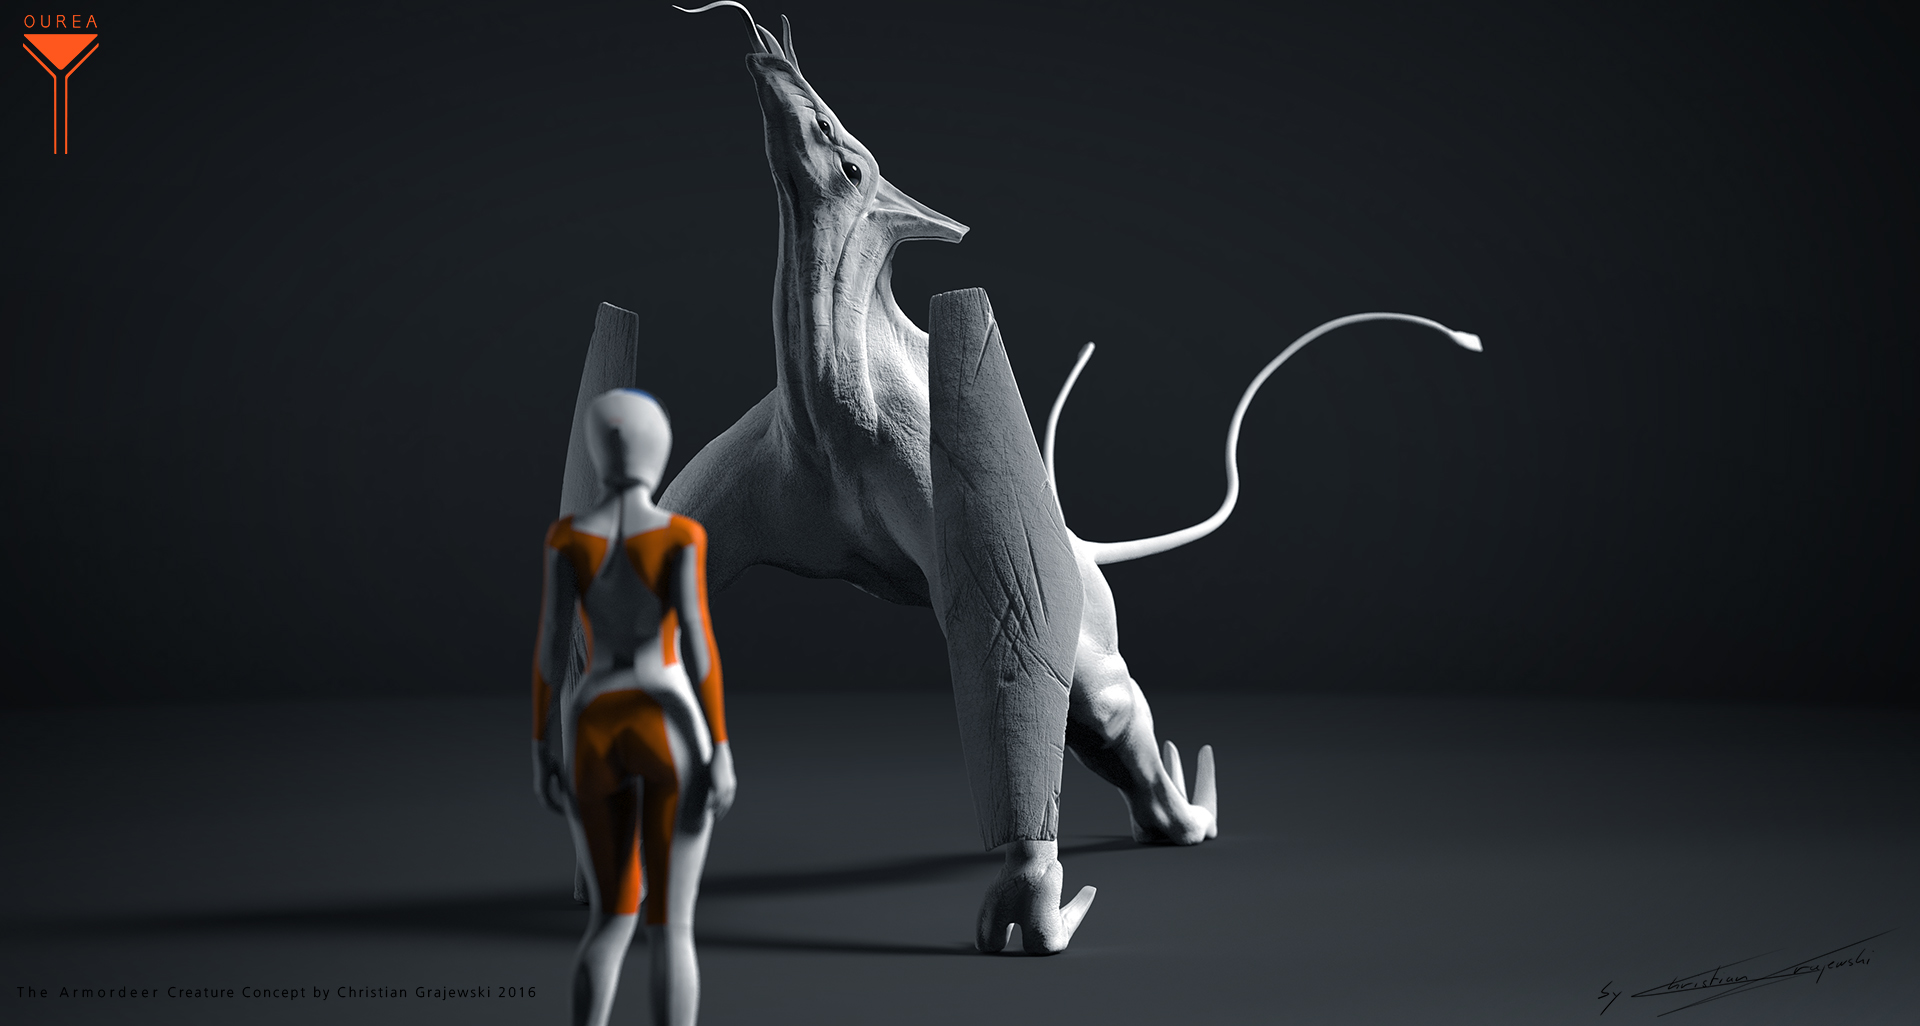 The Armordeer Creature Concept 06 by Christian Grajewski.jpg